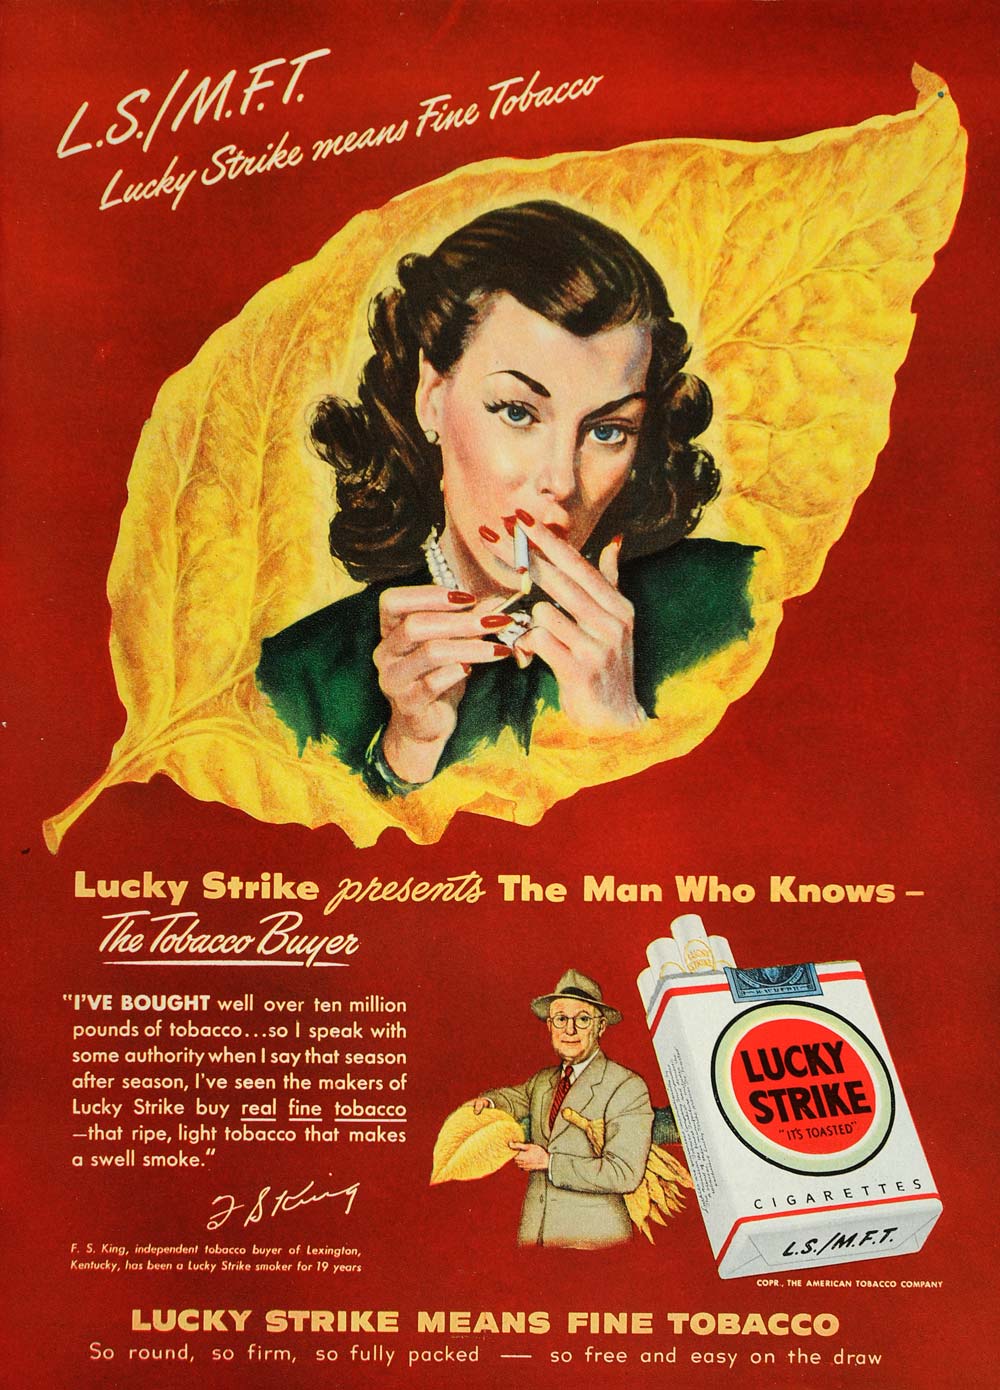 1948 Ad Lucky Strike Cigarettes F.S. King Tobacco Buyer - ORIGINAL TM1